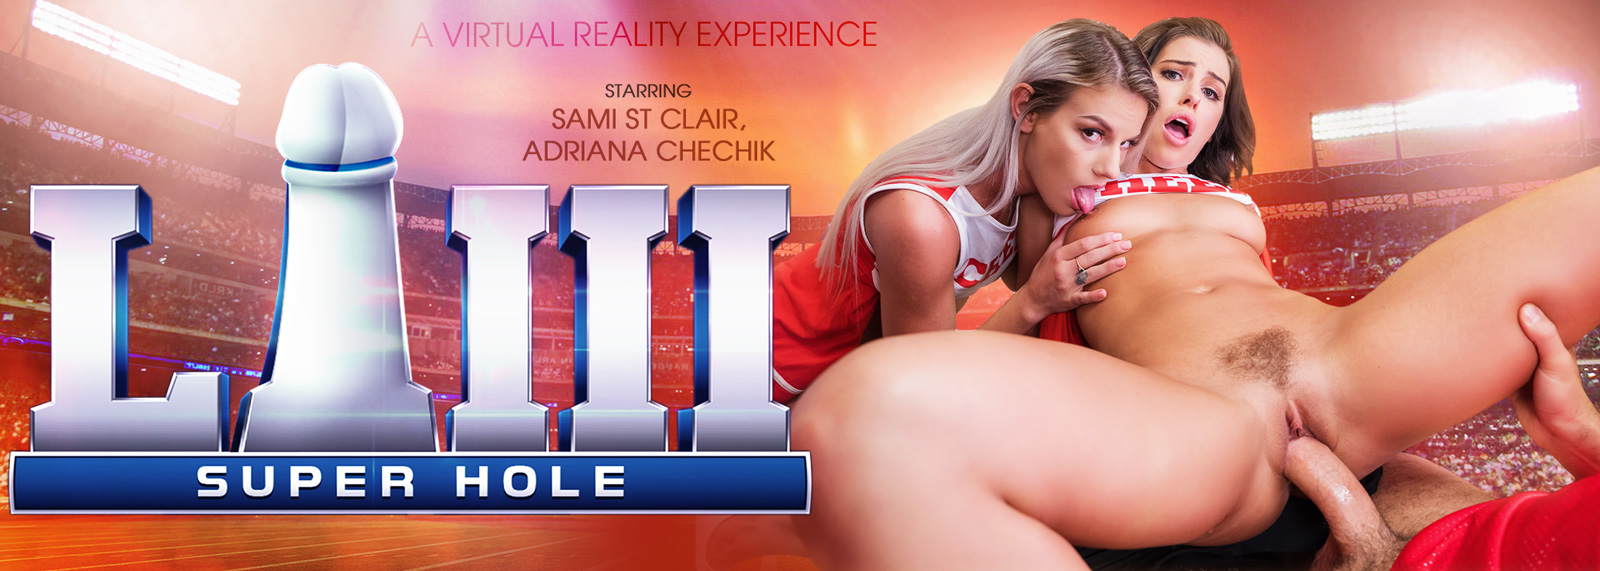 Super Hole LIII - VR Porn Video, Starring: Sami St Clair, Adriana Chechik